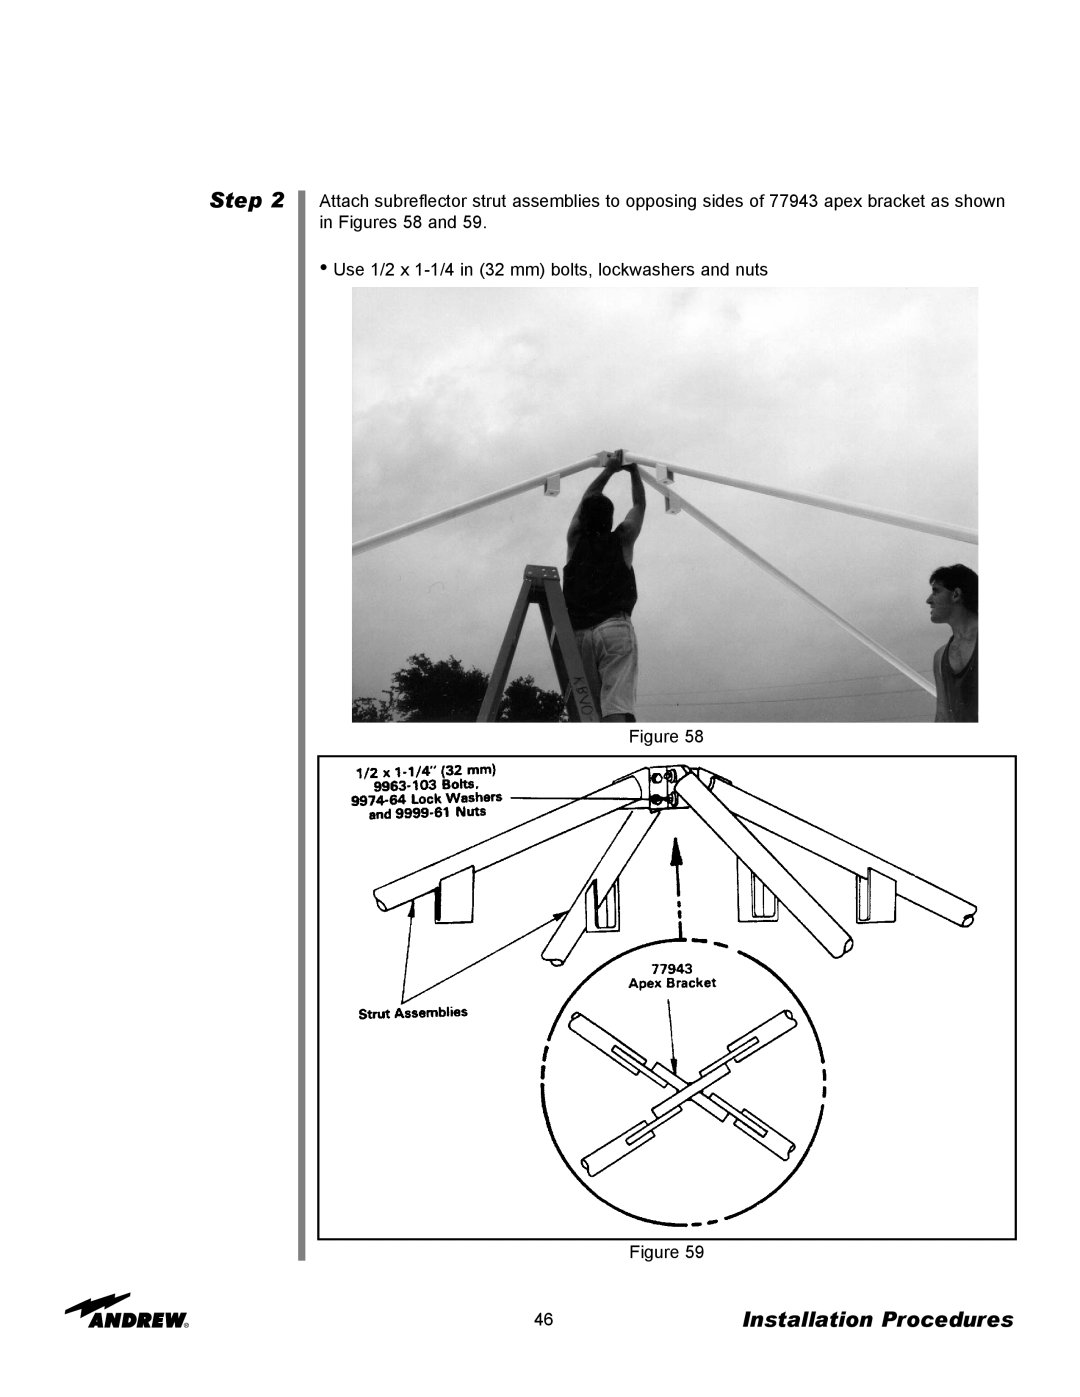 Andrew ES73 manual Step, Installation Procedures, Figure Figure 